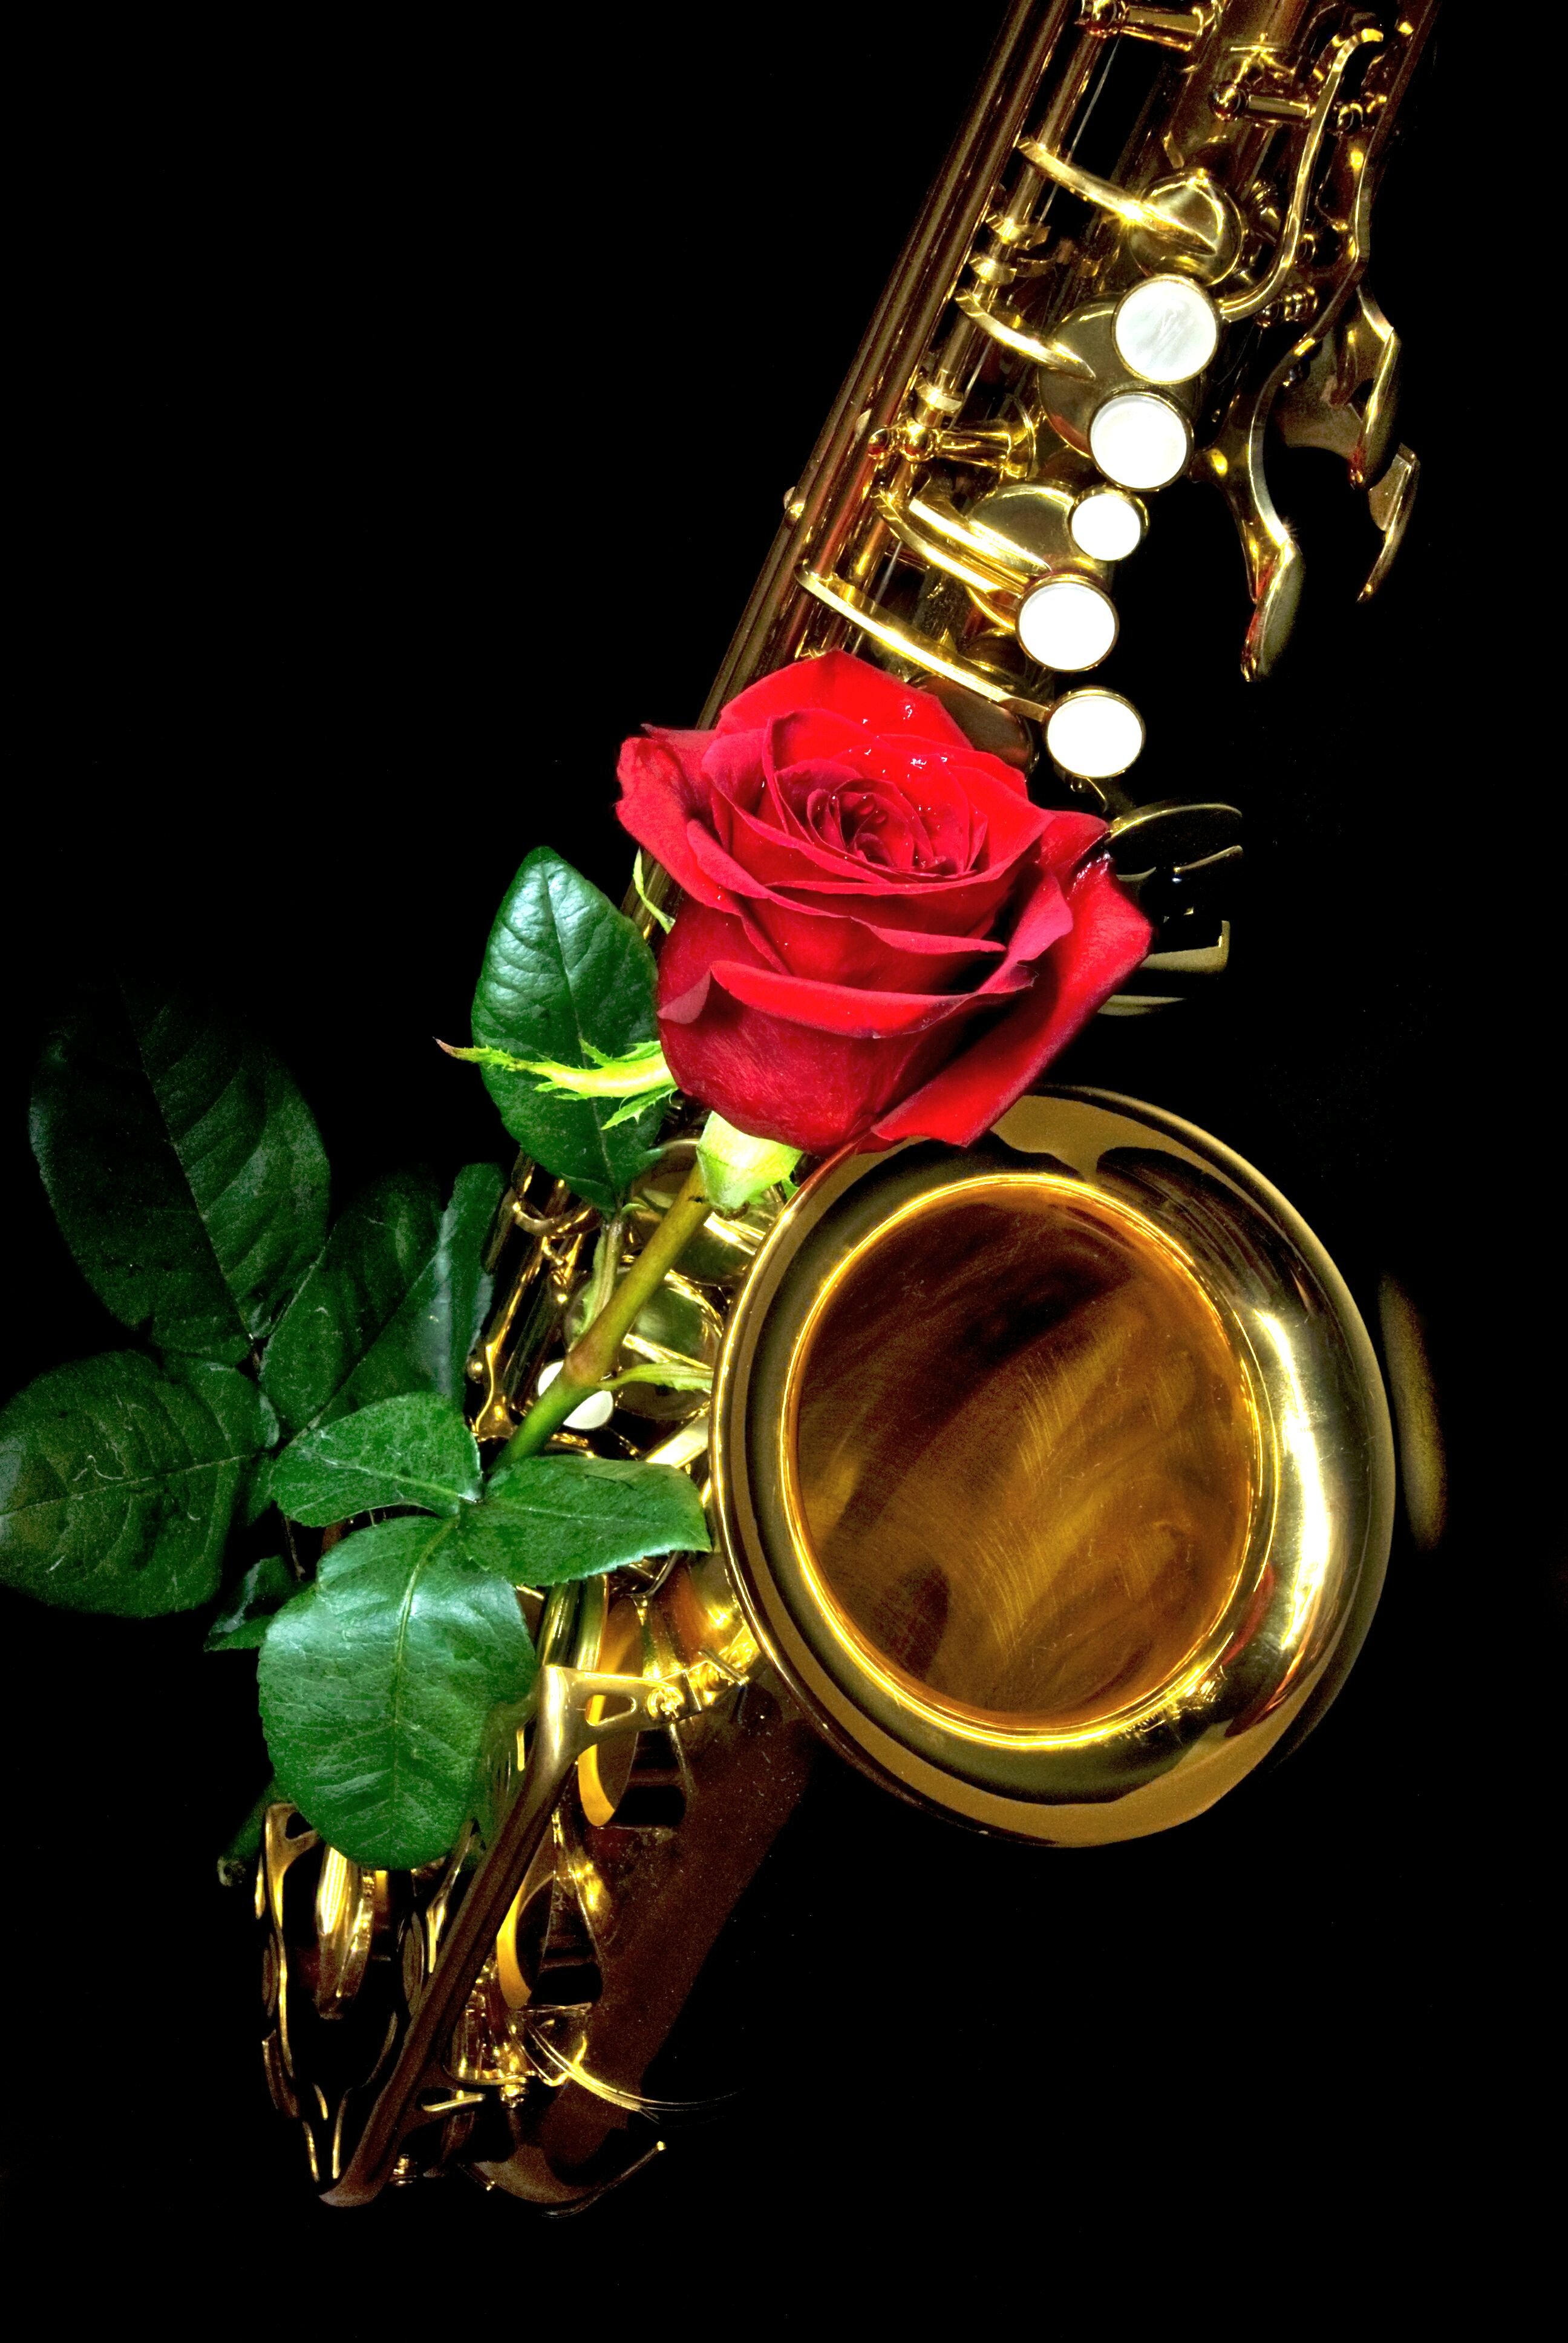 Музыка нежный саксофон. Саксофон. Цветы саксофонисту. Саксофон и цветы. Саксофонист на темном фоне.